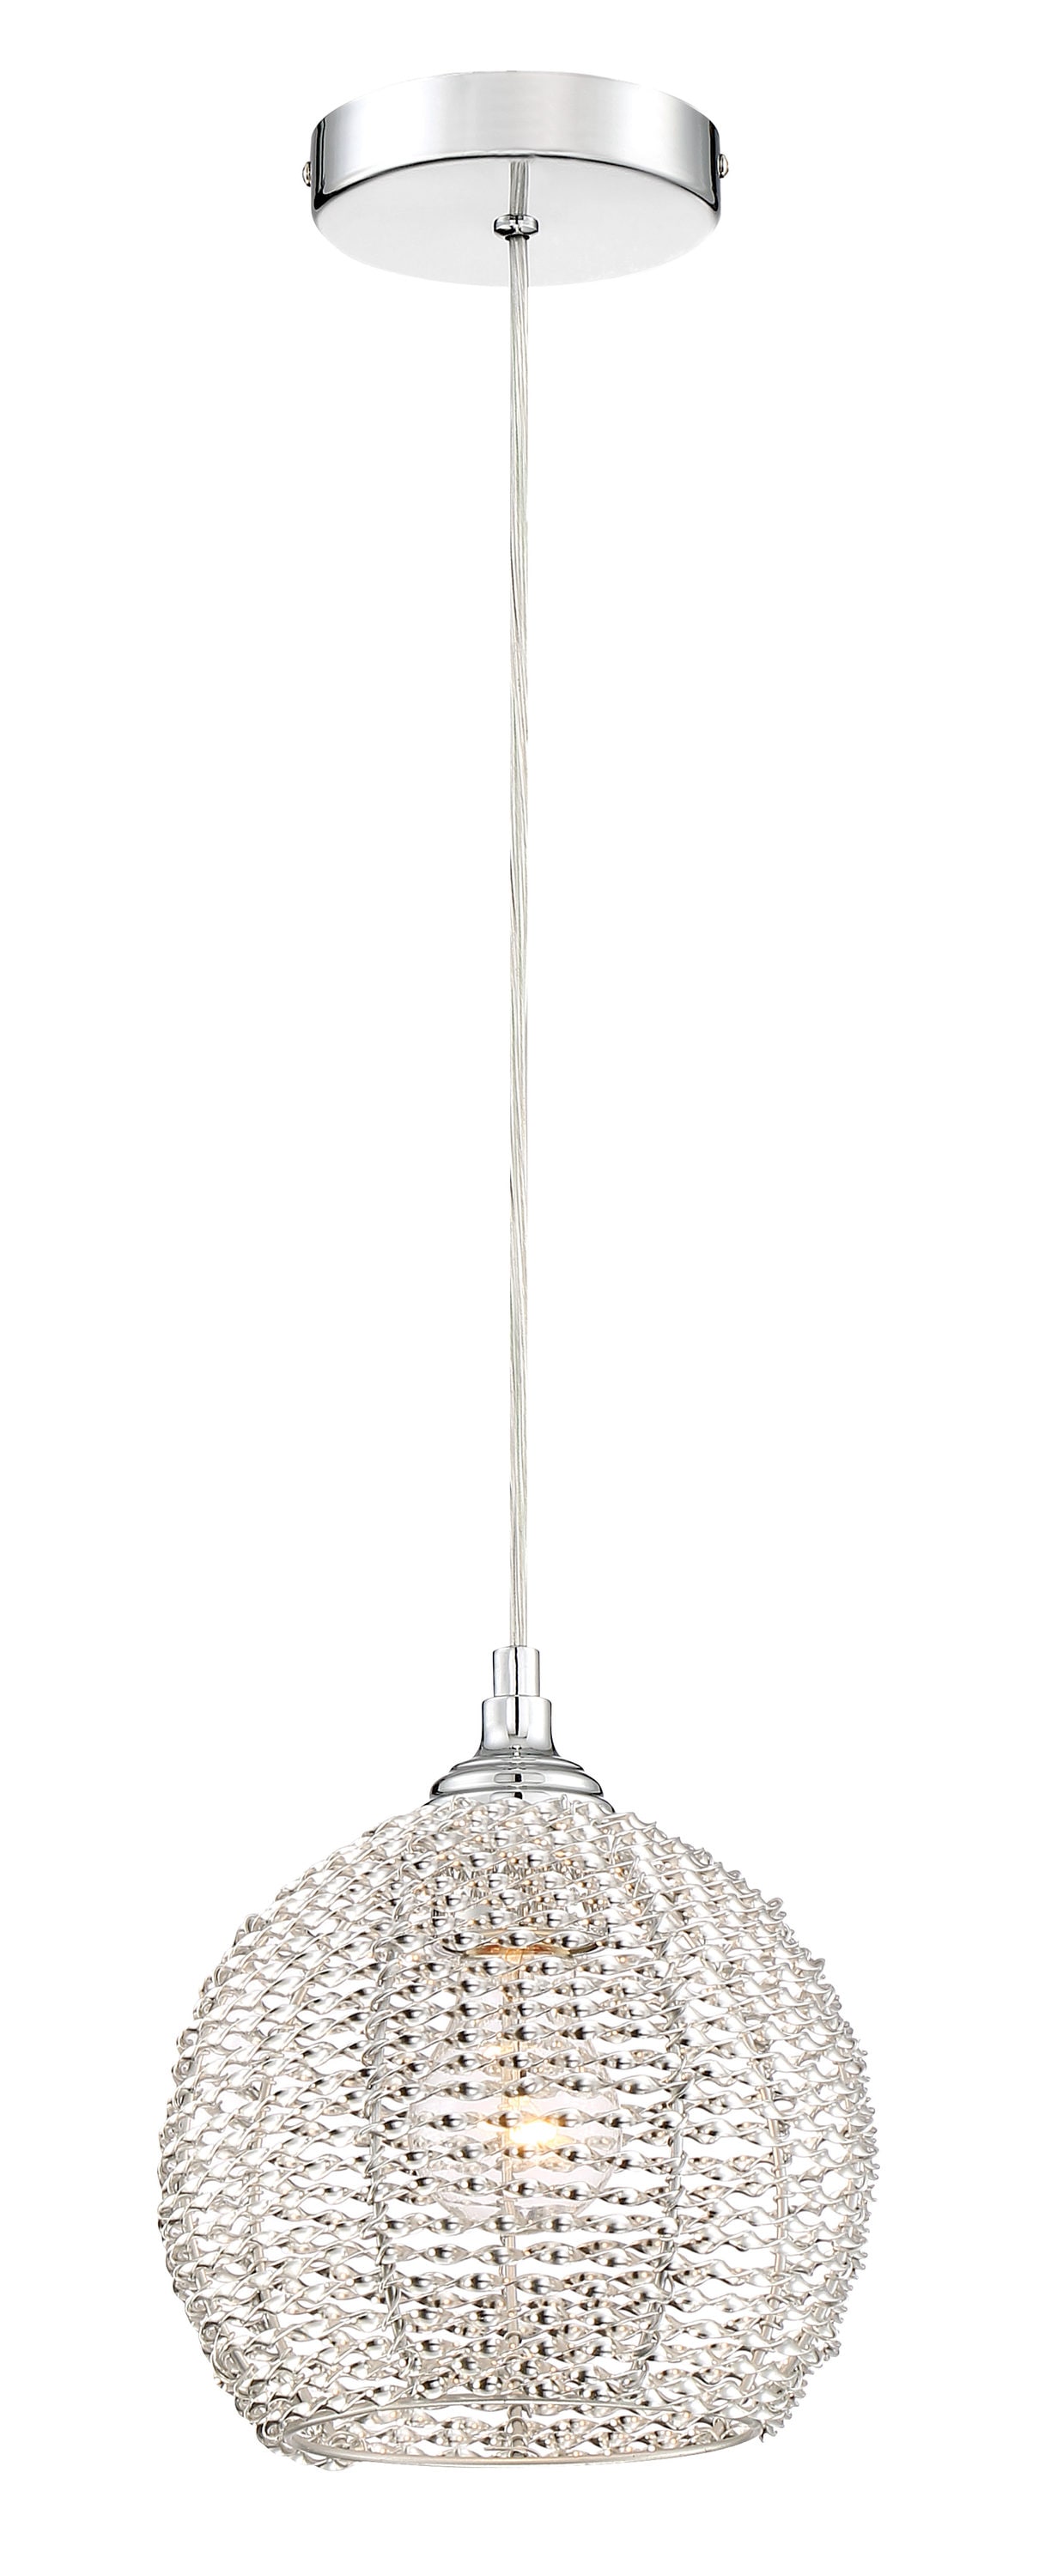 Quoizel Tango Polished Chrome Transitional department Lighting Hanging Pendant at the Light Mini Globe Pendant in